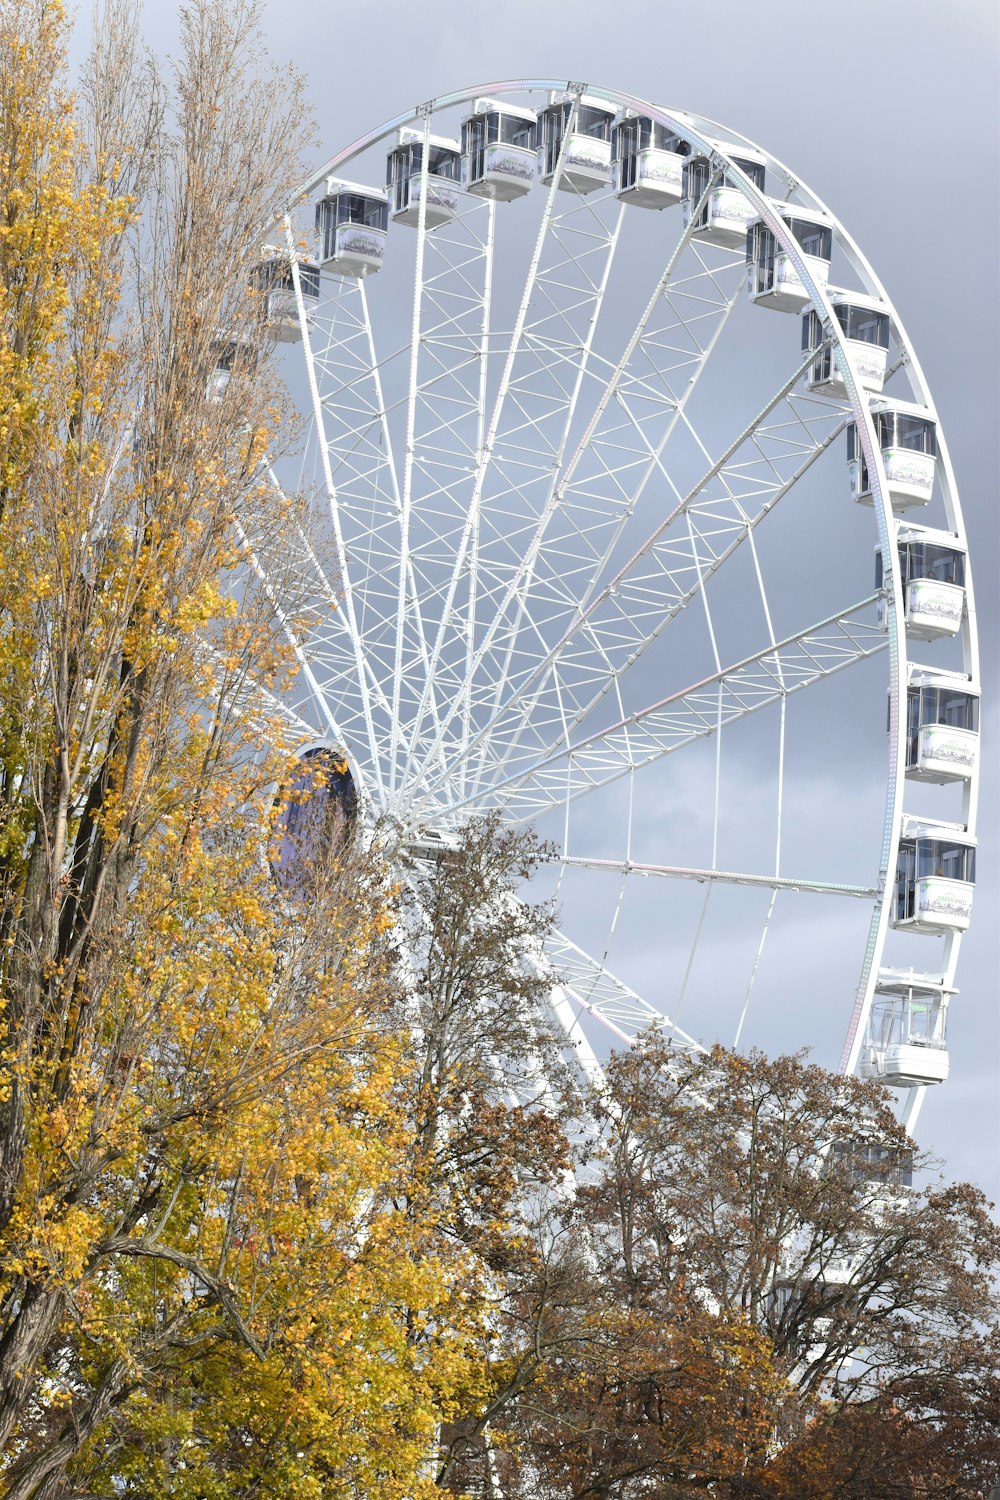 a large white ferris wheel sitting next to a tree